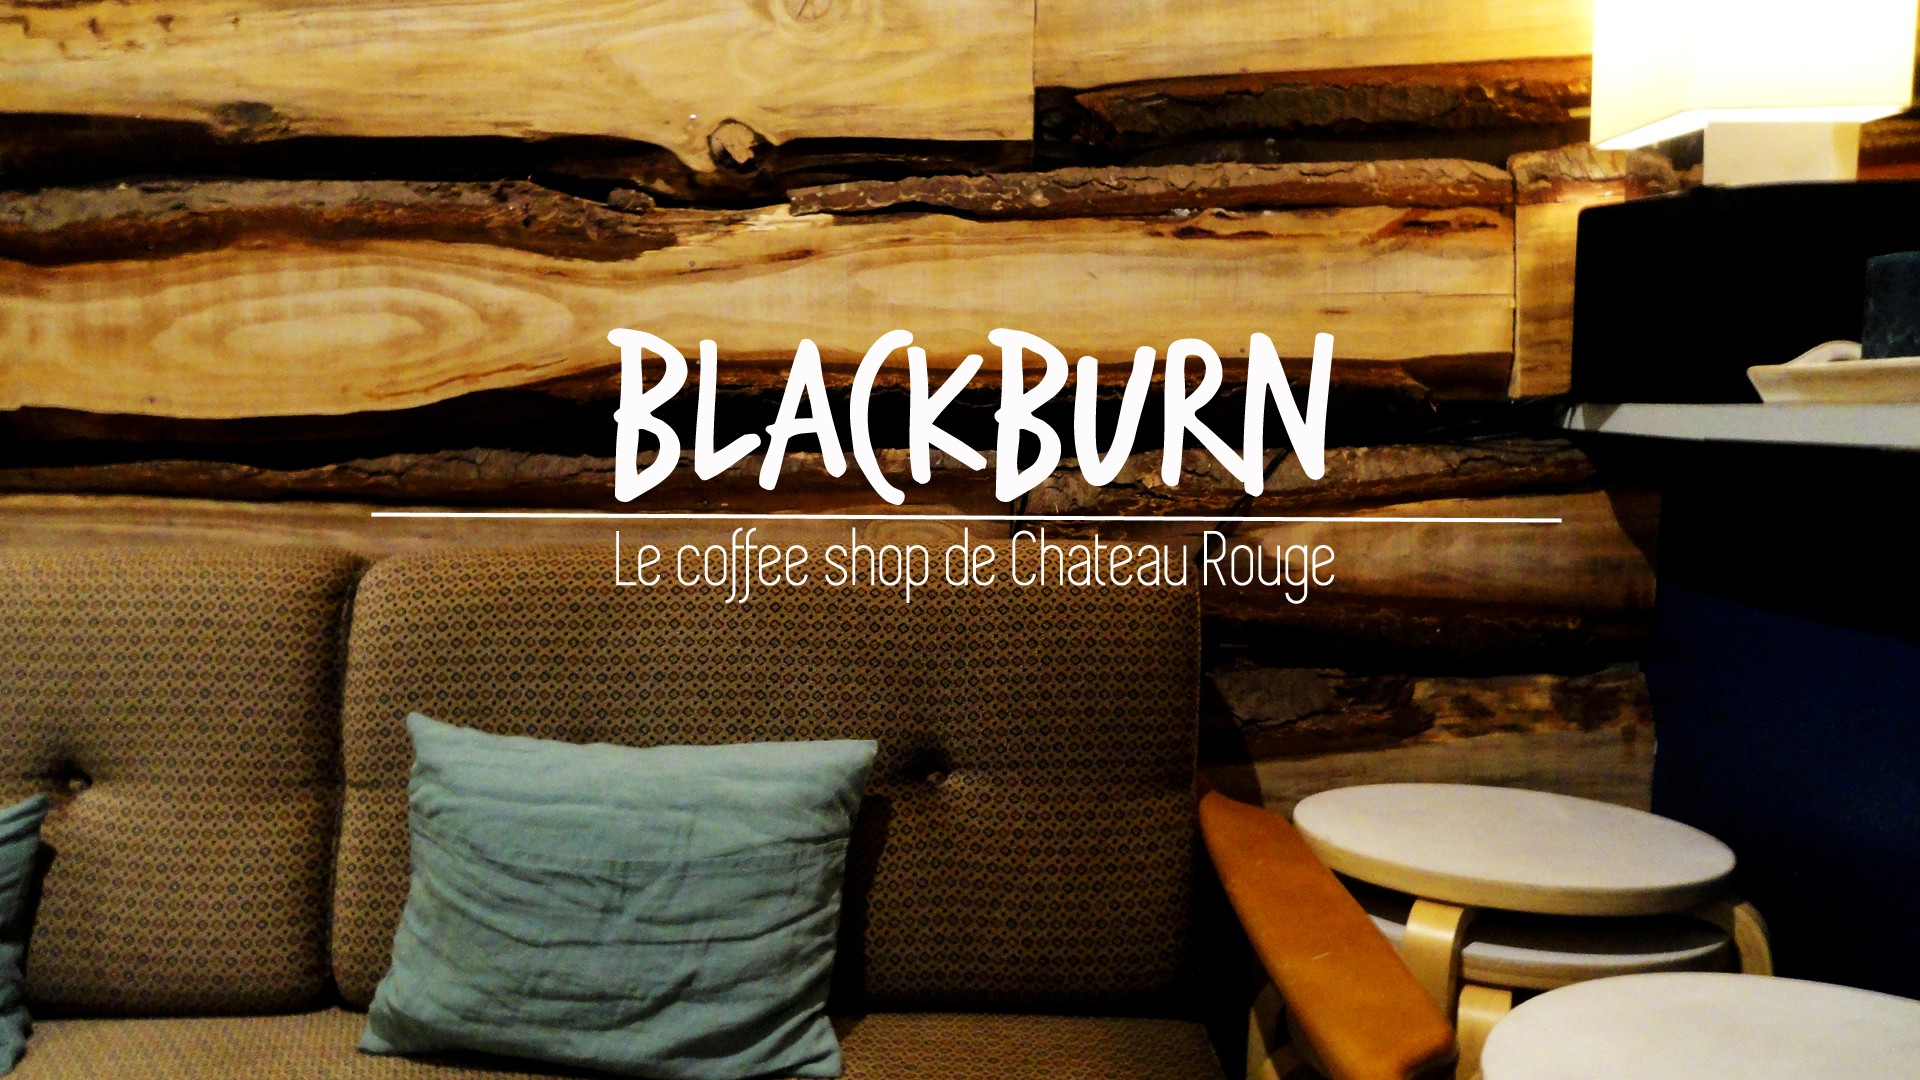 Le Blackburn Coffee Shop